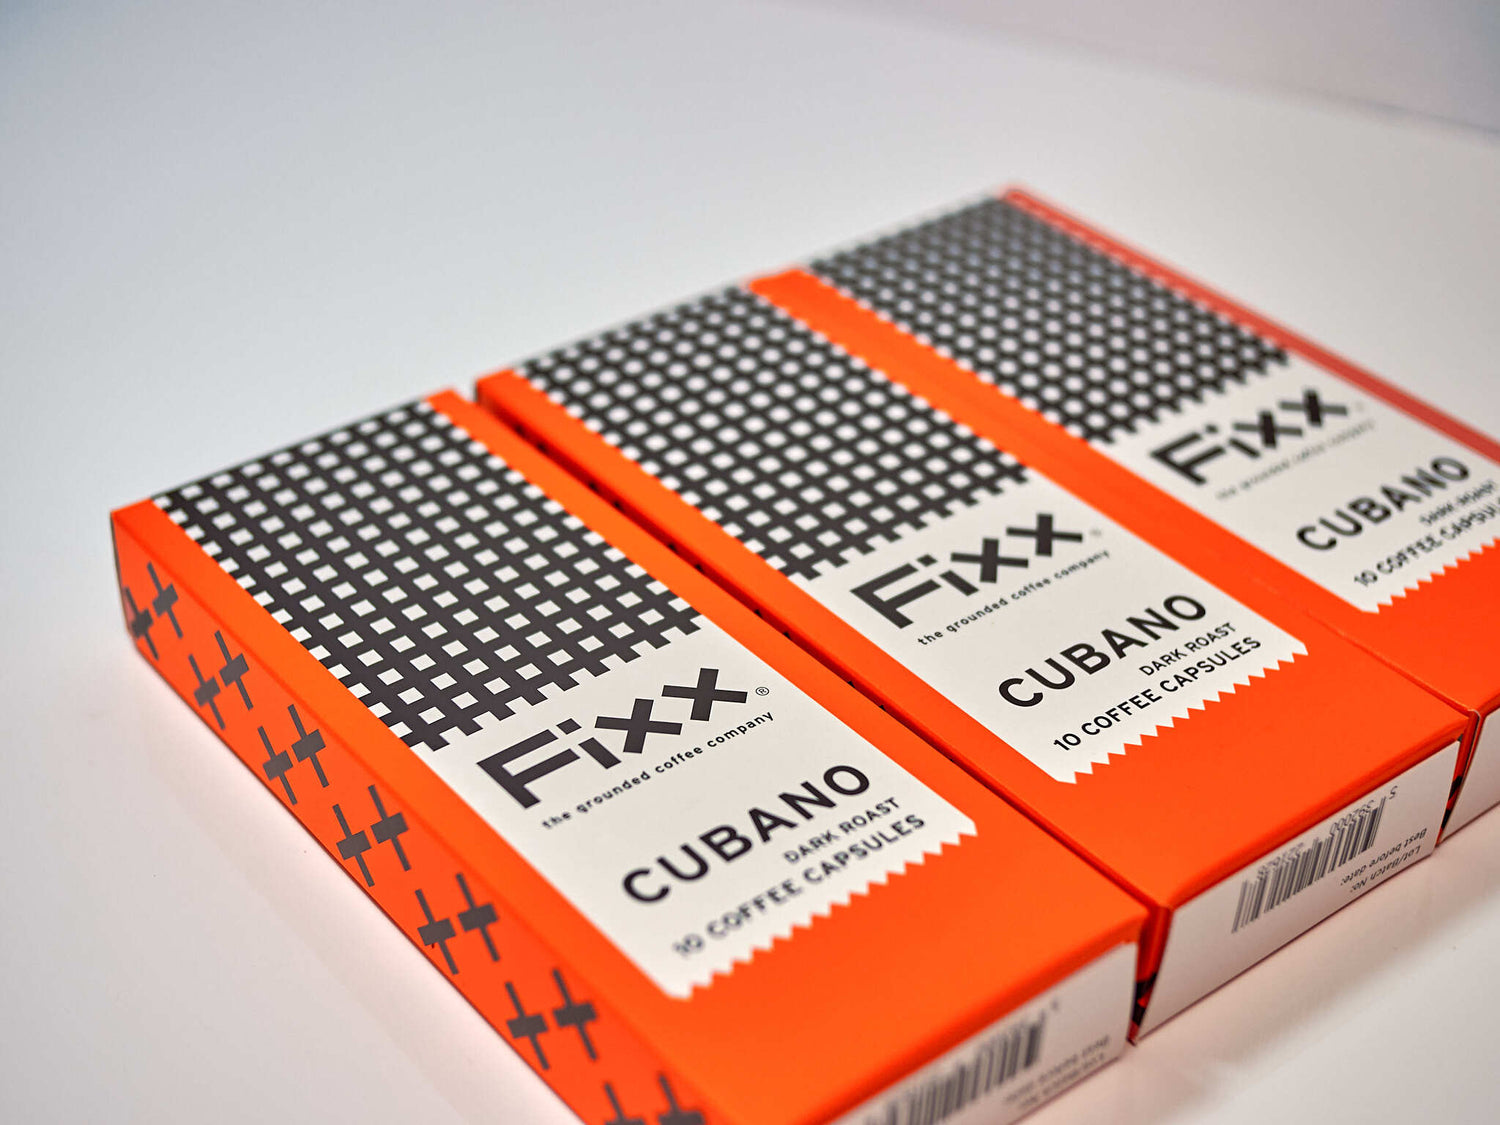 FiXX Cubano Coffee Capsules